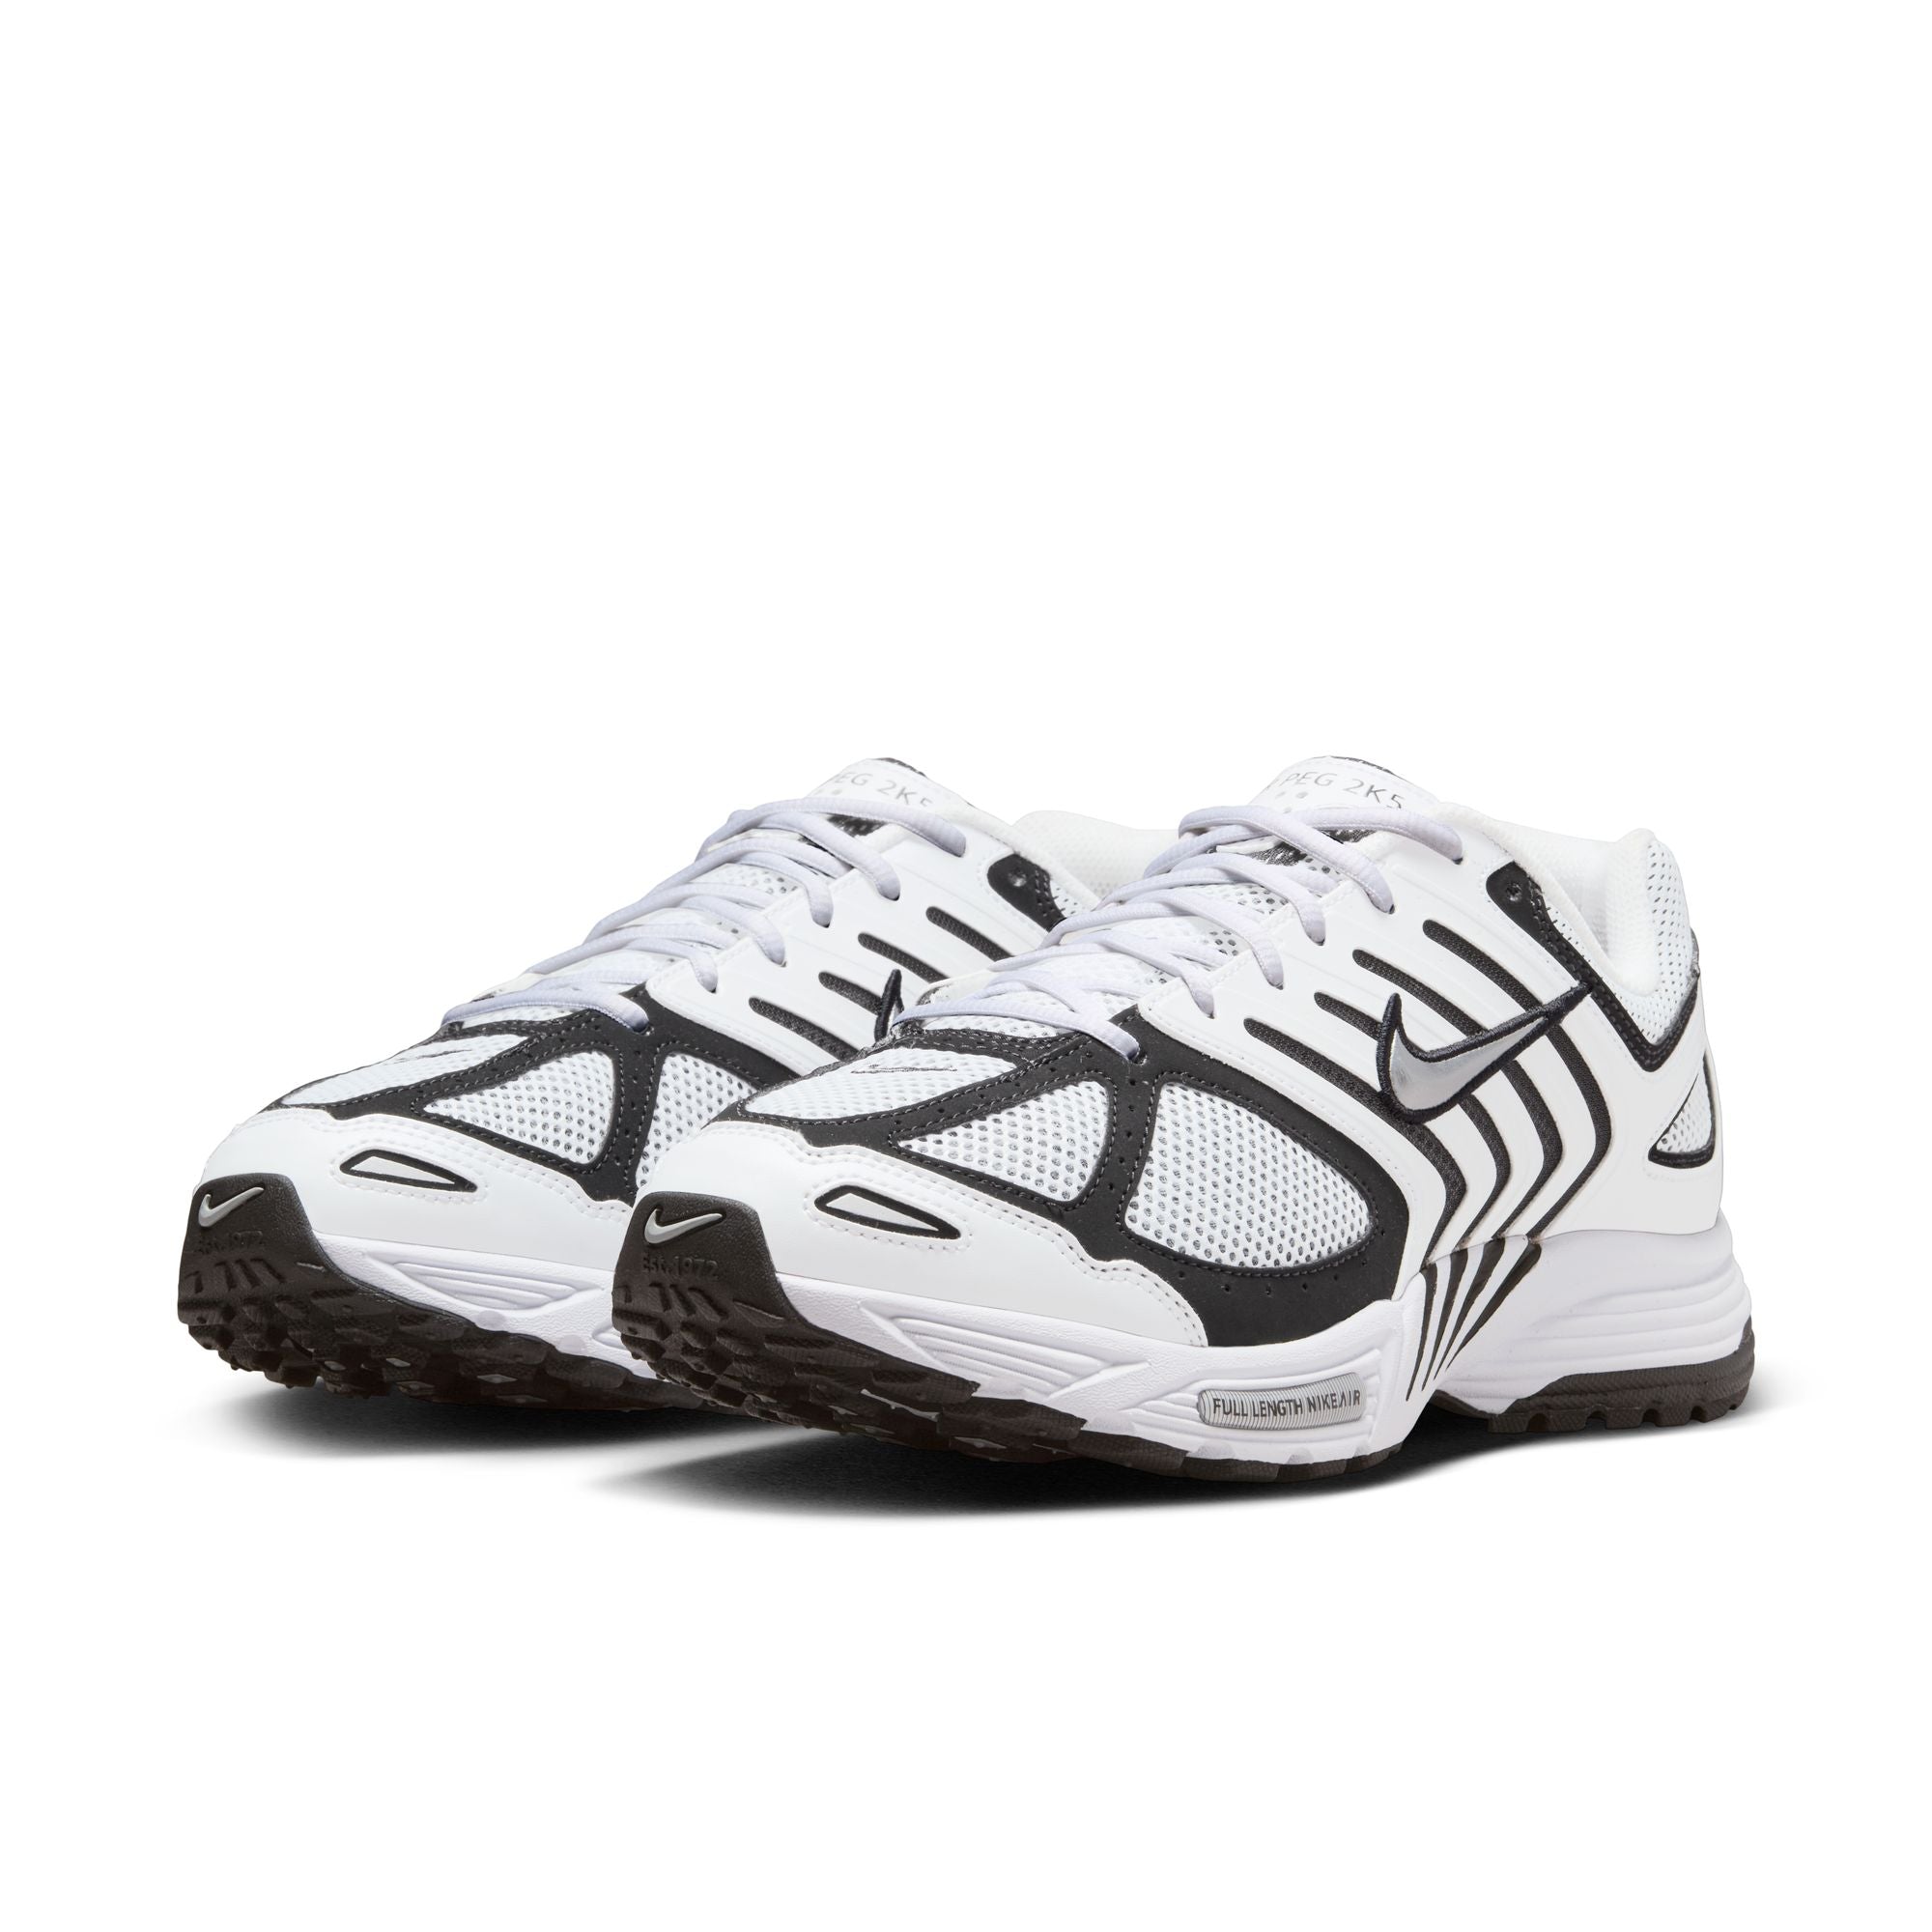 Nike Air Peg 2K5 'White/Metallic Silver'